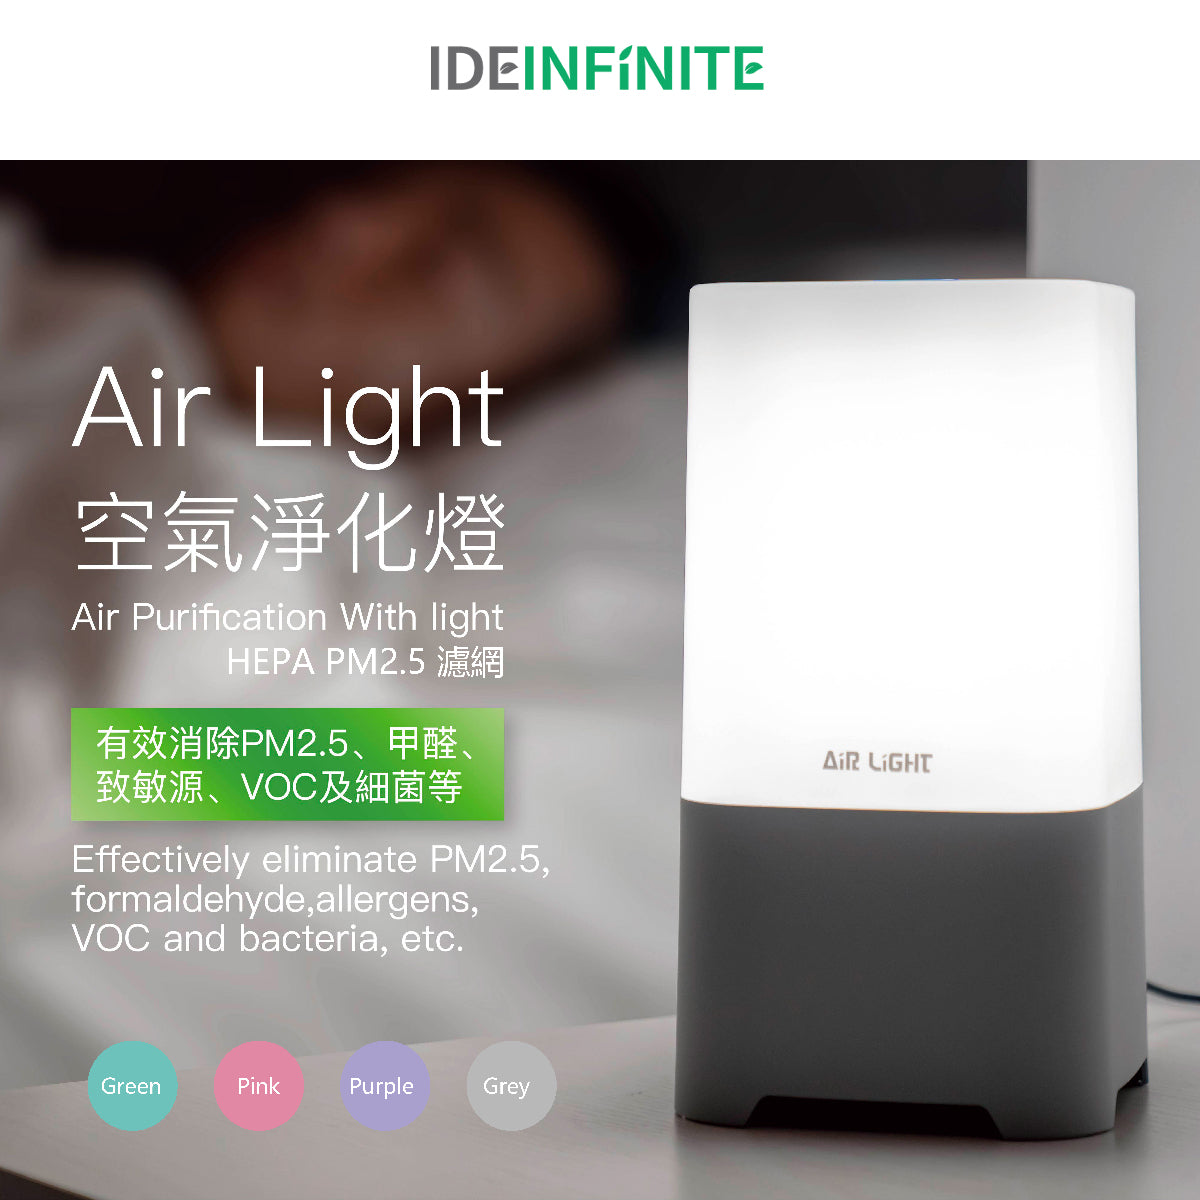 Air Light - 2合1 空氣淨化機 (PM2.5 HEPA 高效濾網) 內置 LED 燈 ~ 灰色